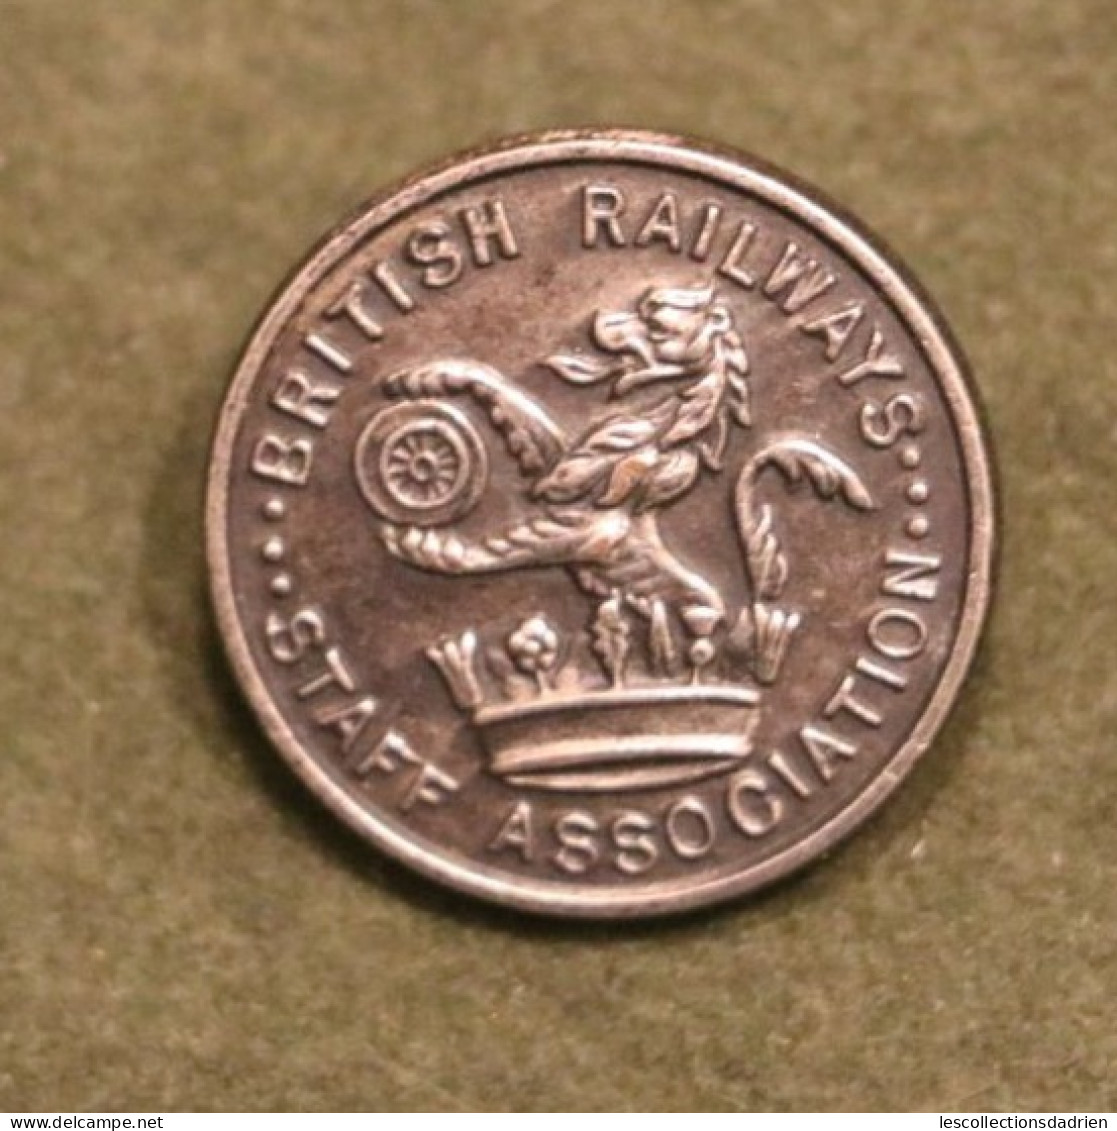 Insigne Broche British Railways Staff Association - Badge Pin Brooch - Train - Chemin De Fer